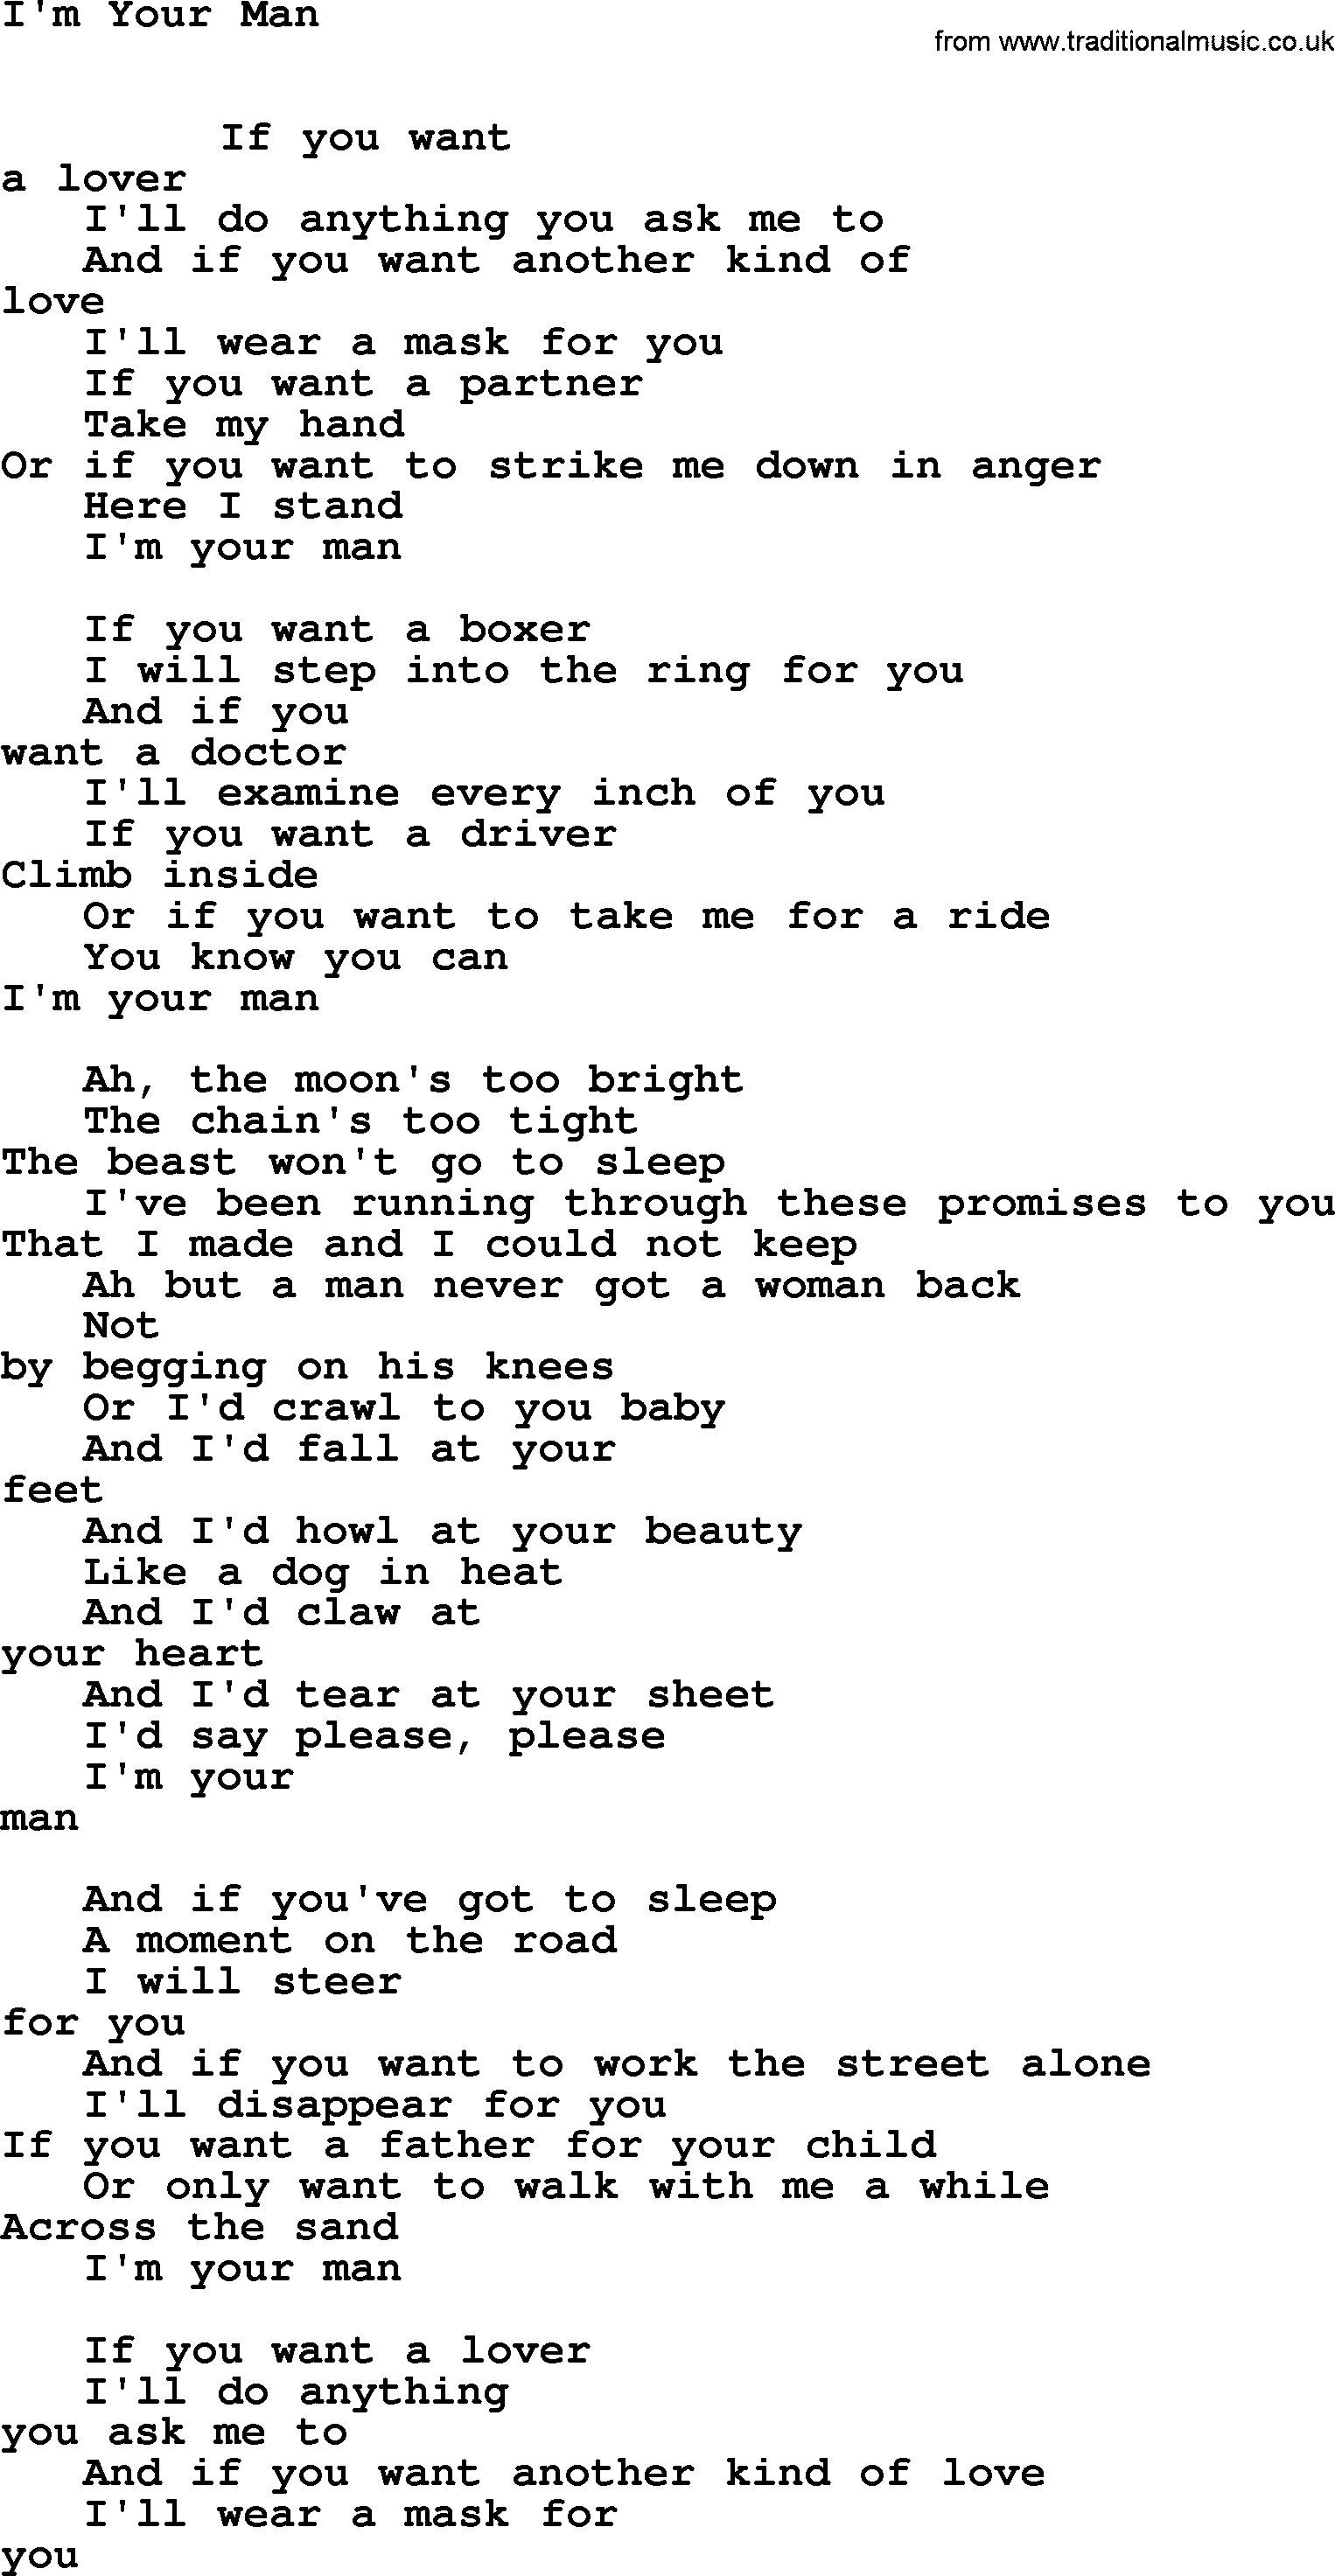 Leonard Cohen song Im Your Man-leonard-cohen.txt lyrics